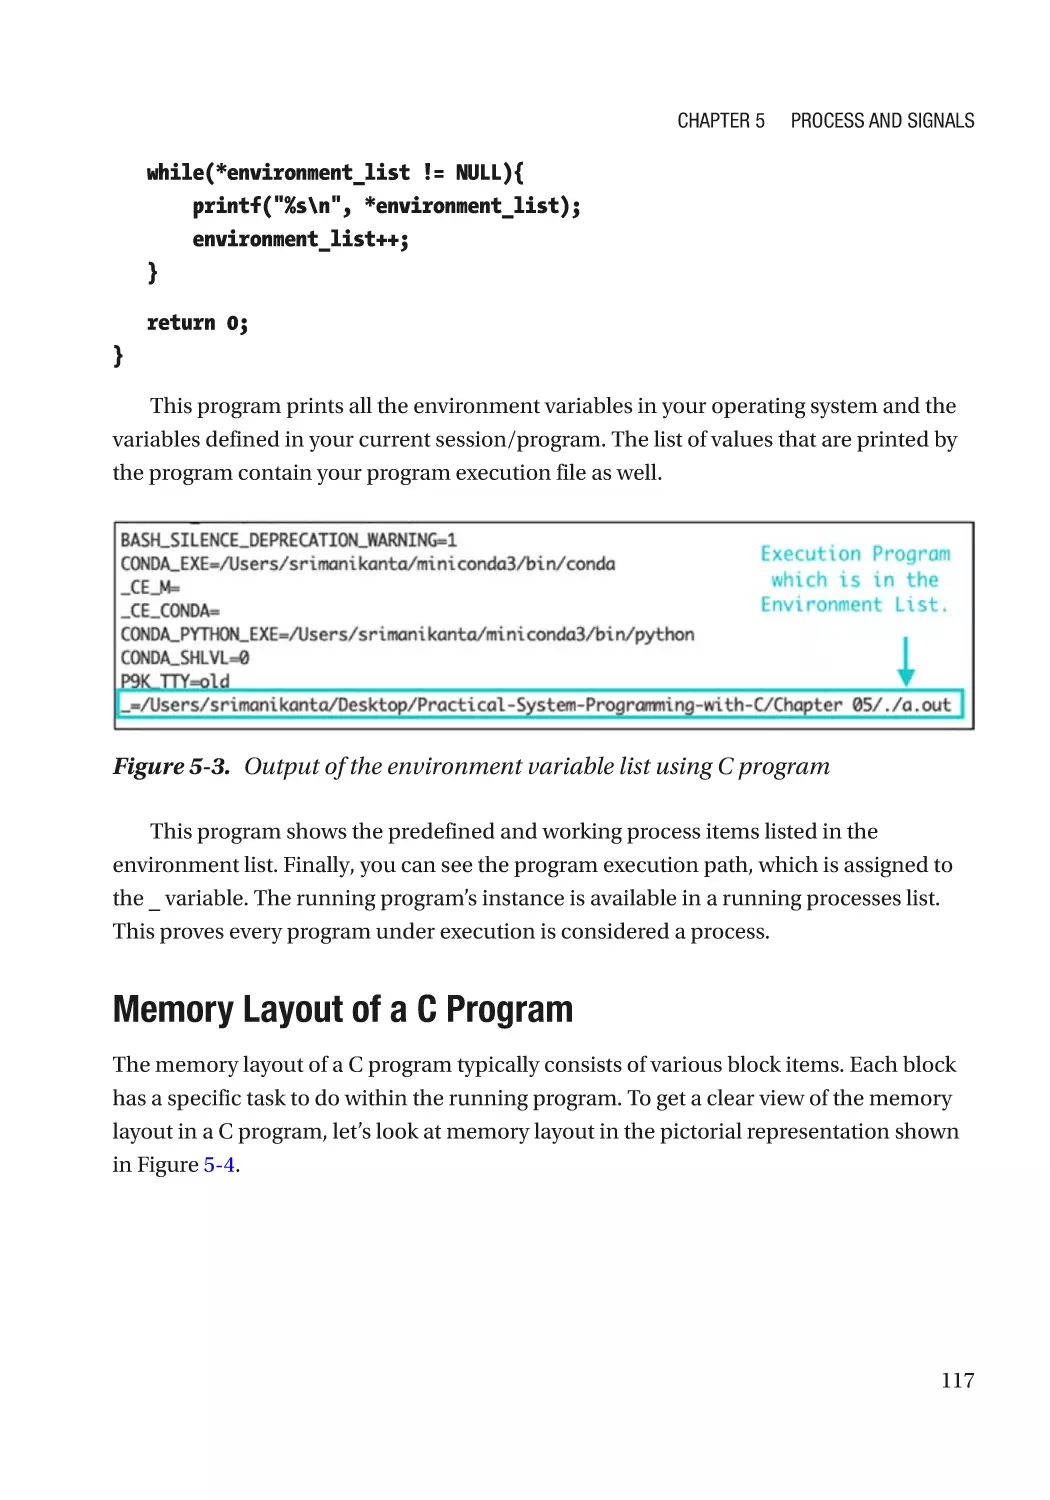 Memory Layout of a C Program